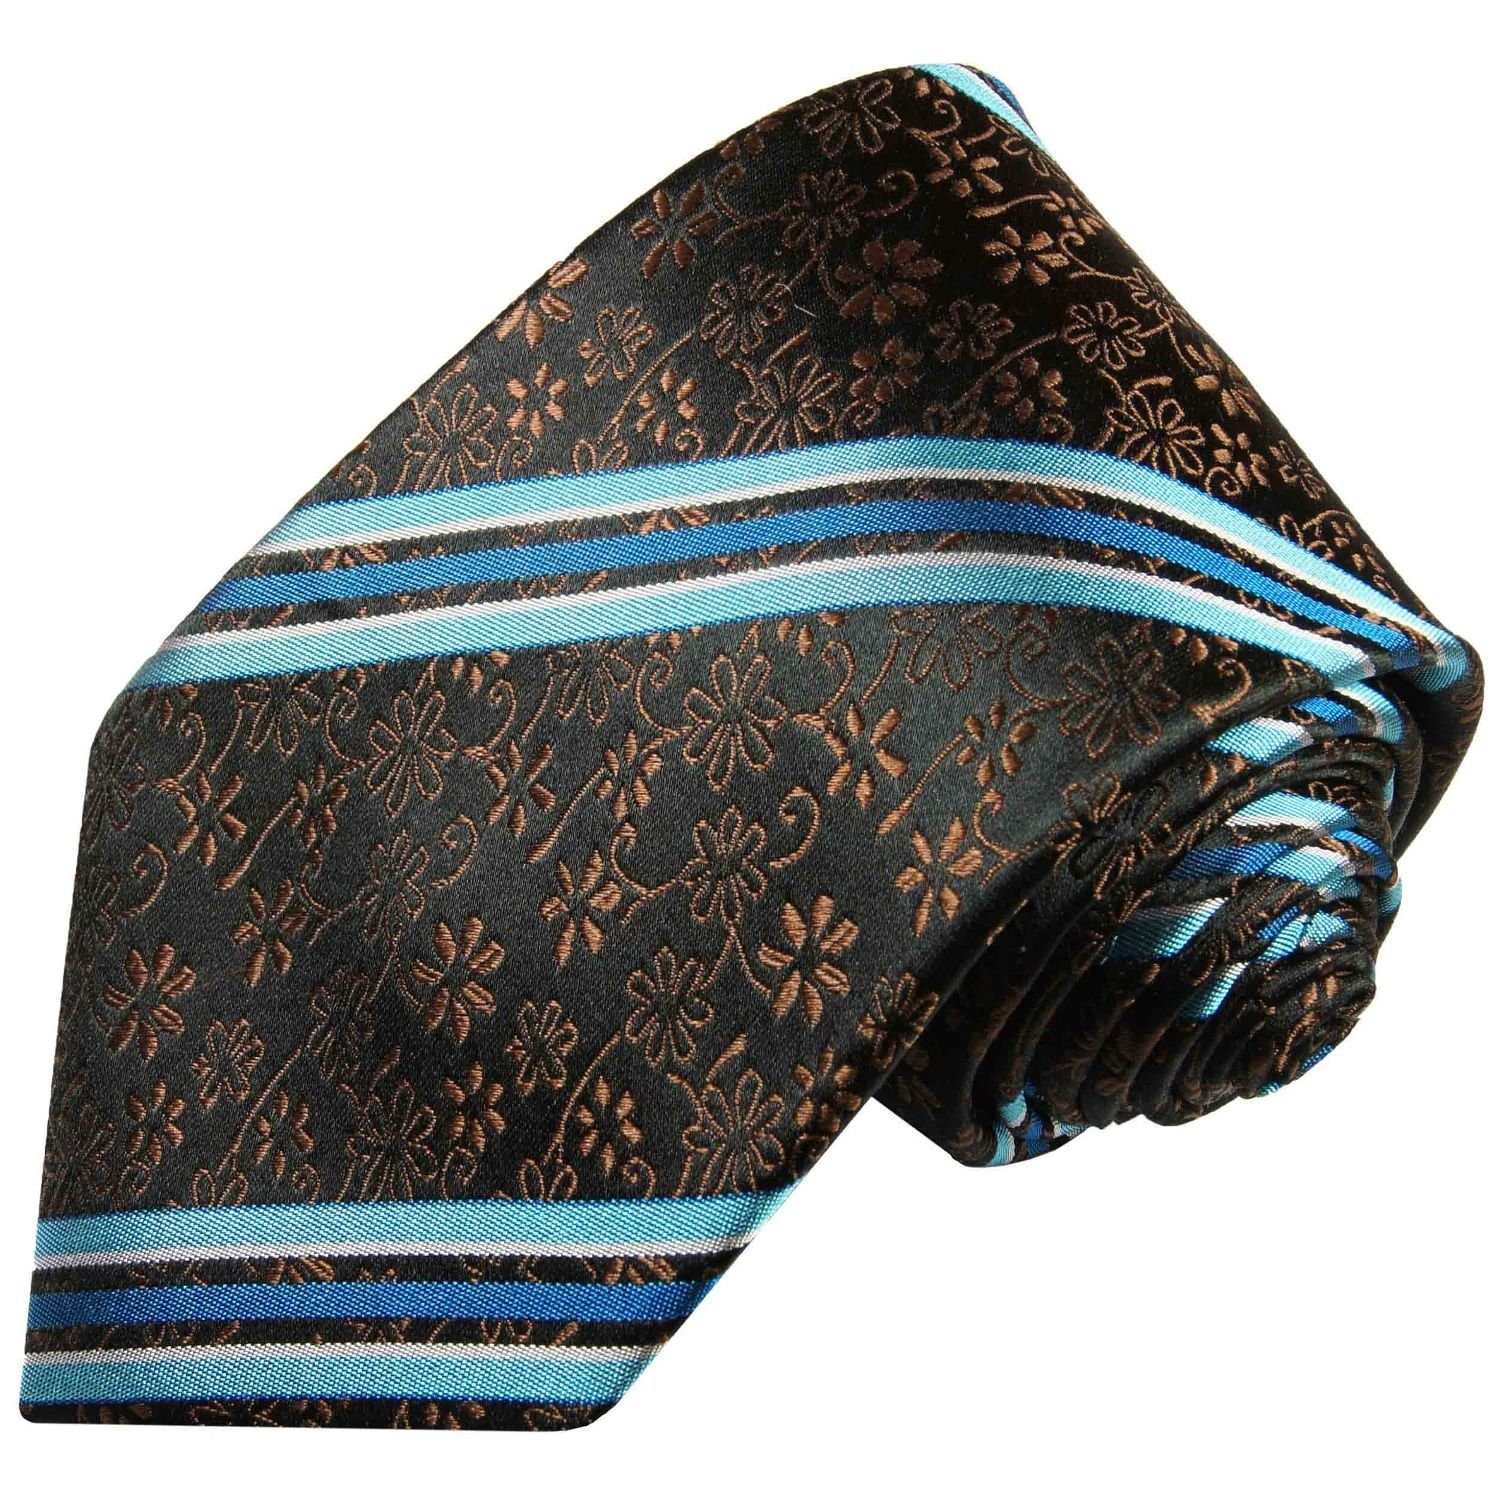 Paul Malone Krawatte Moderne 394 floral (6cm), 100% Seidenkrawatte Schmal gestreift türkis Herren braun Seide